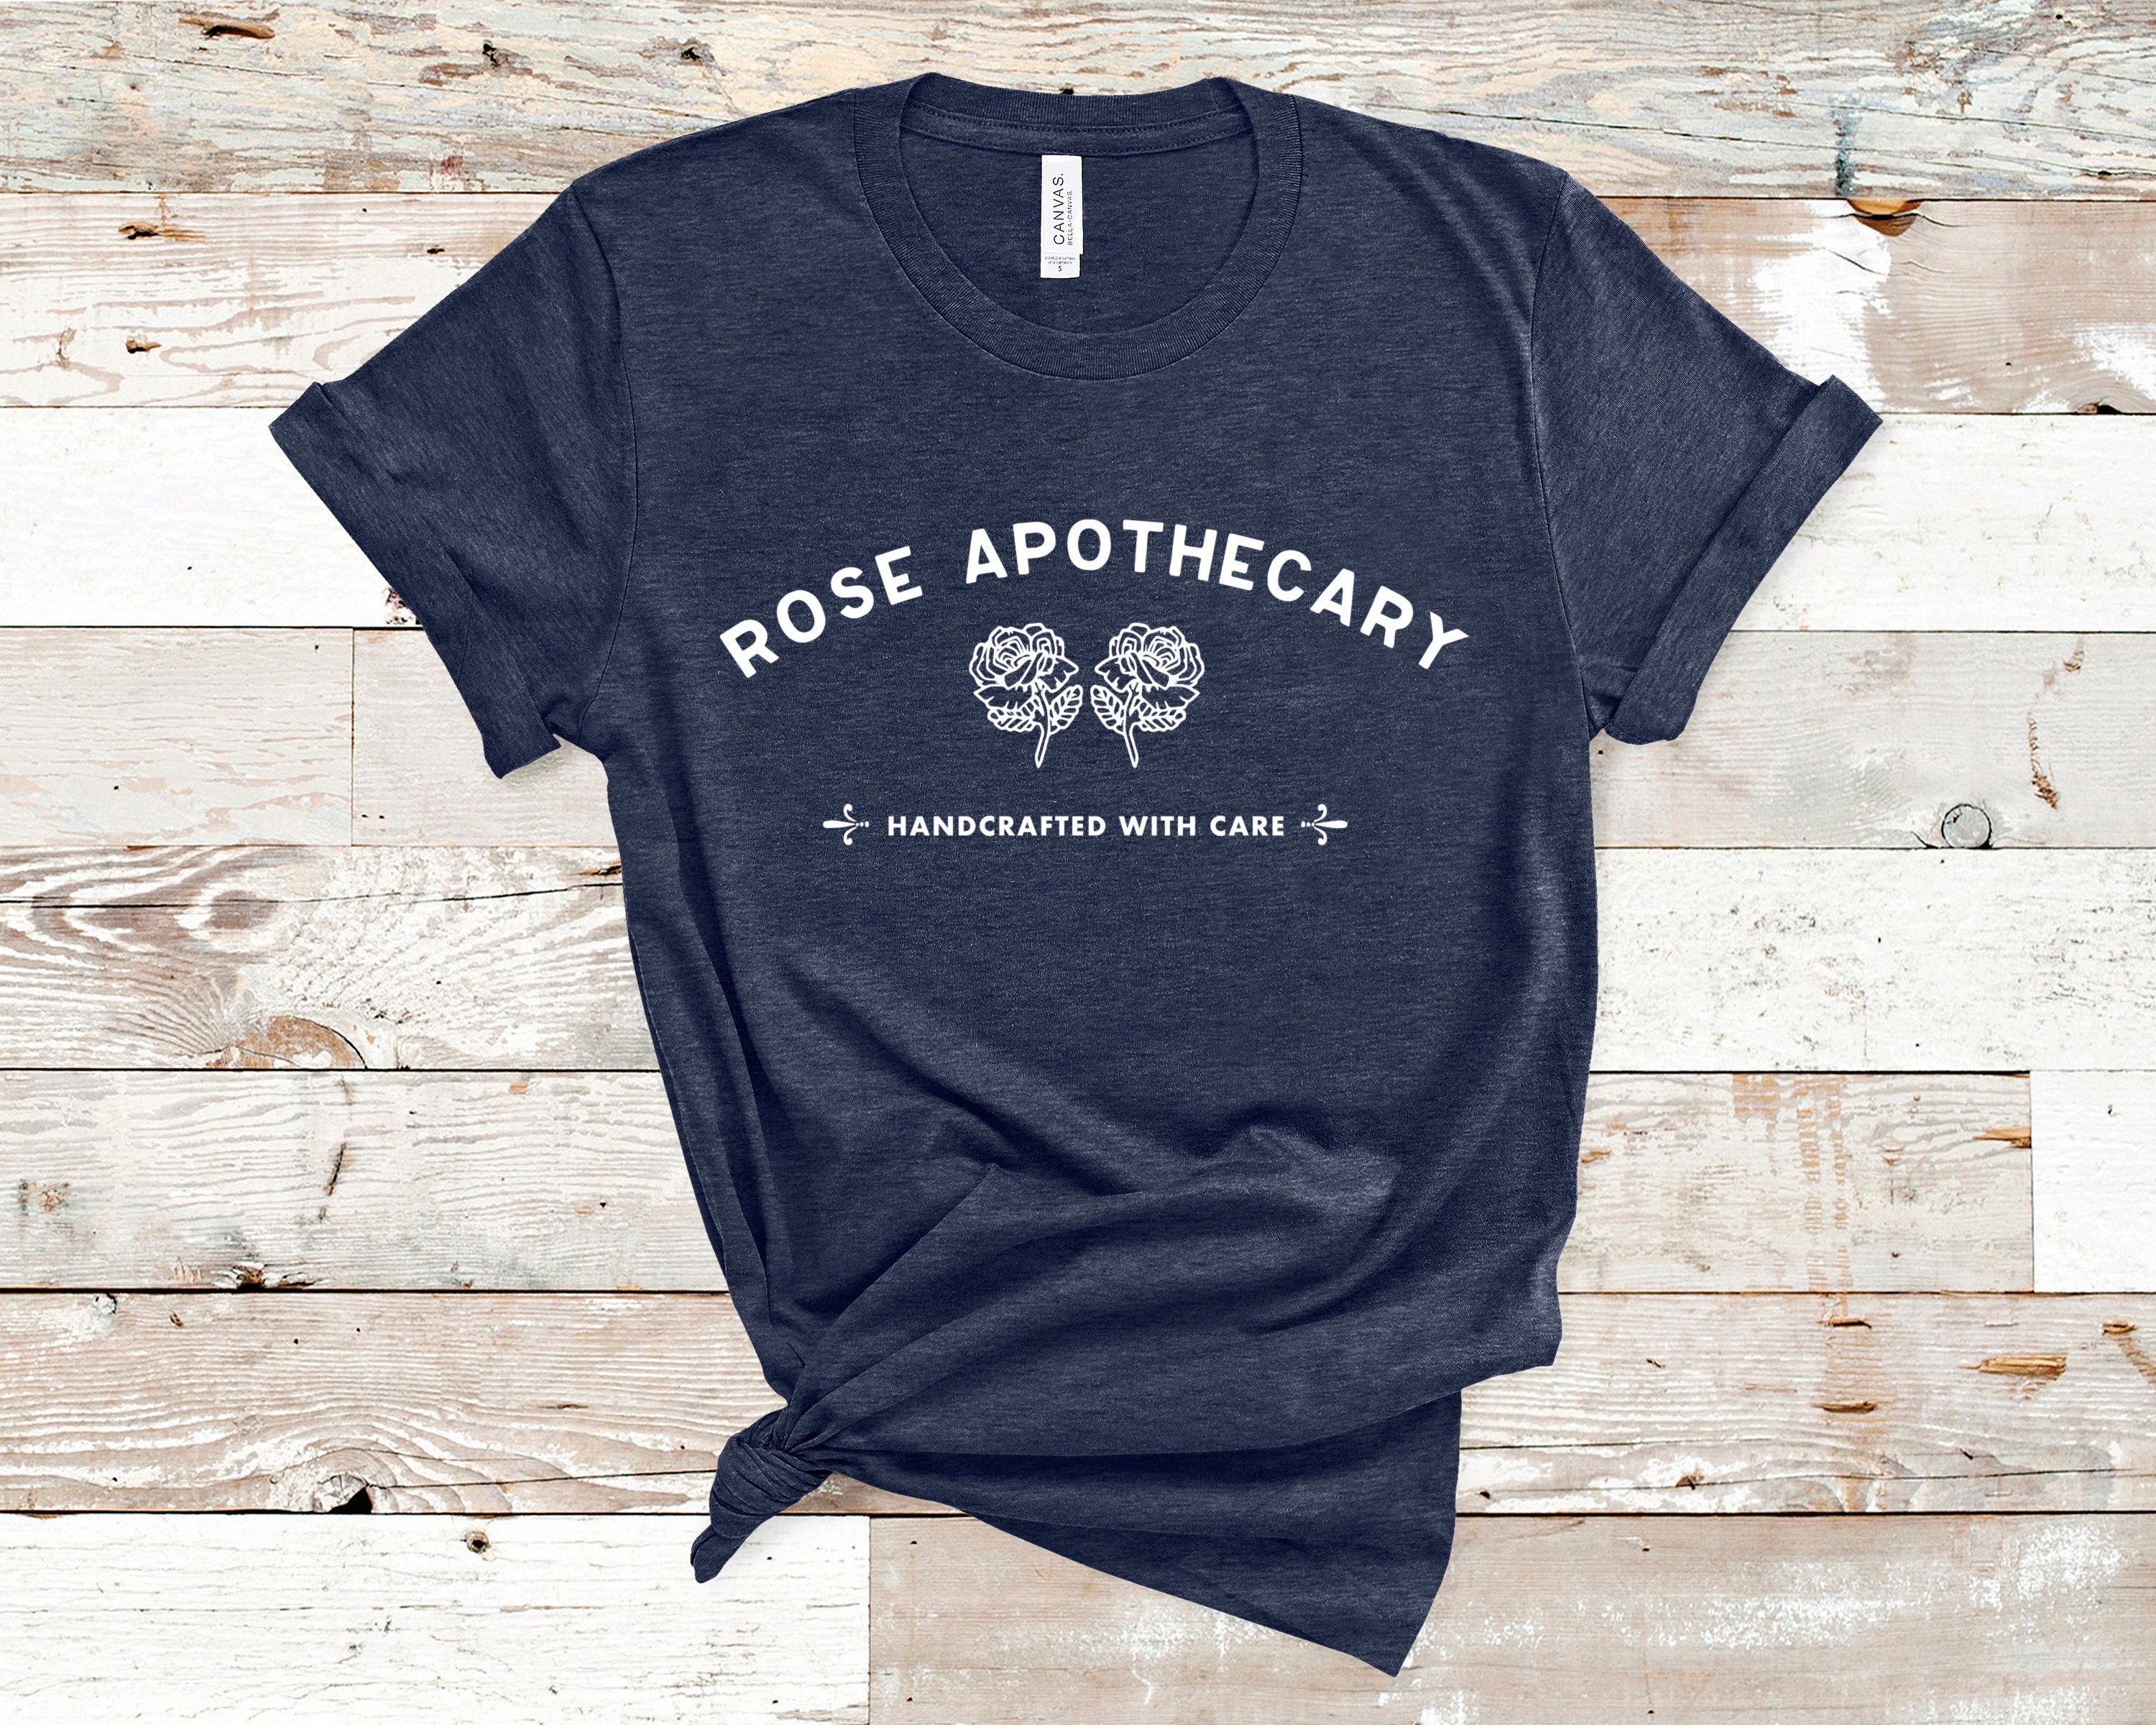 Schitt's Creek Shirt Rose Apothecary TShirt Ew David | Etsy